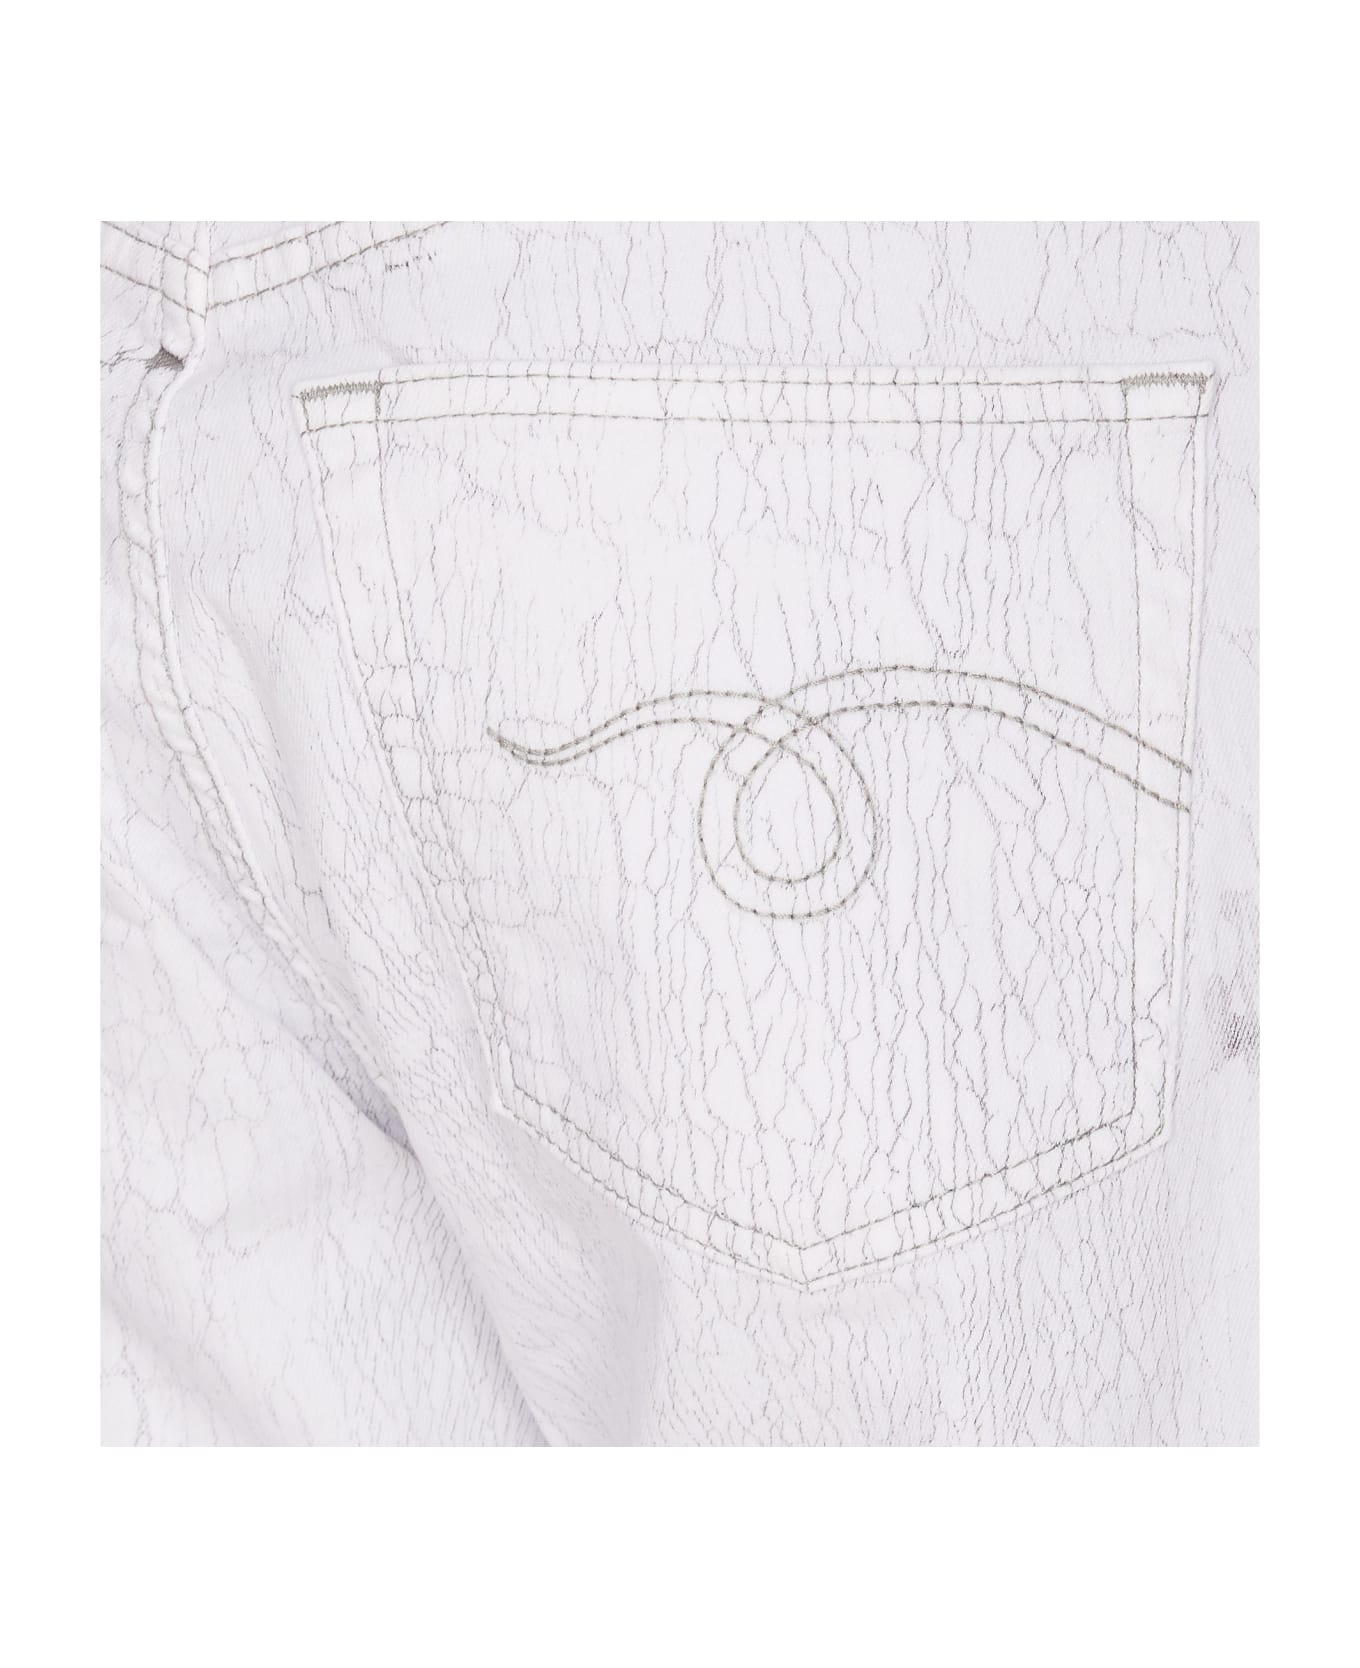 R13 Jane Jeans - WHITE/GREY